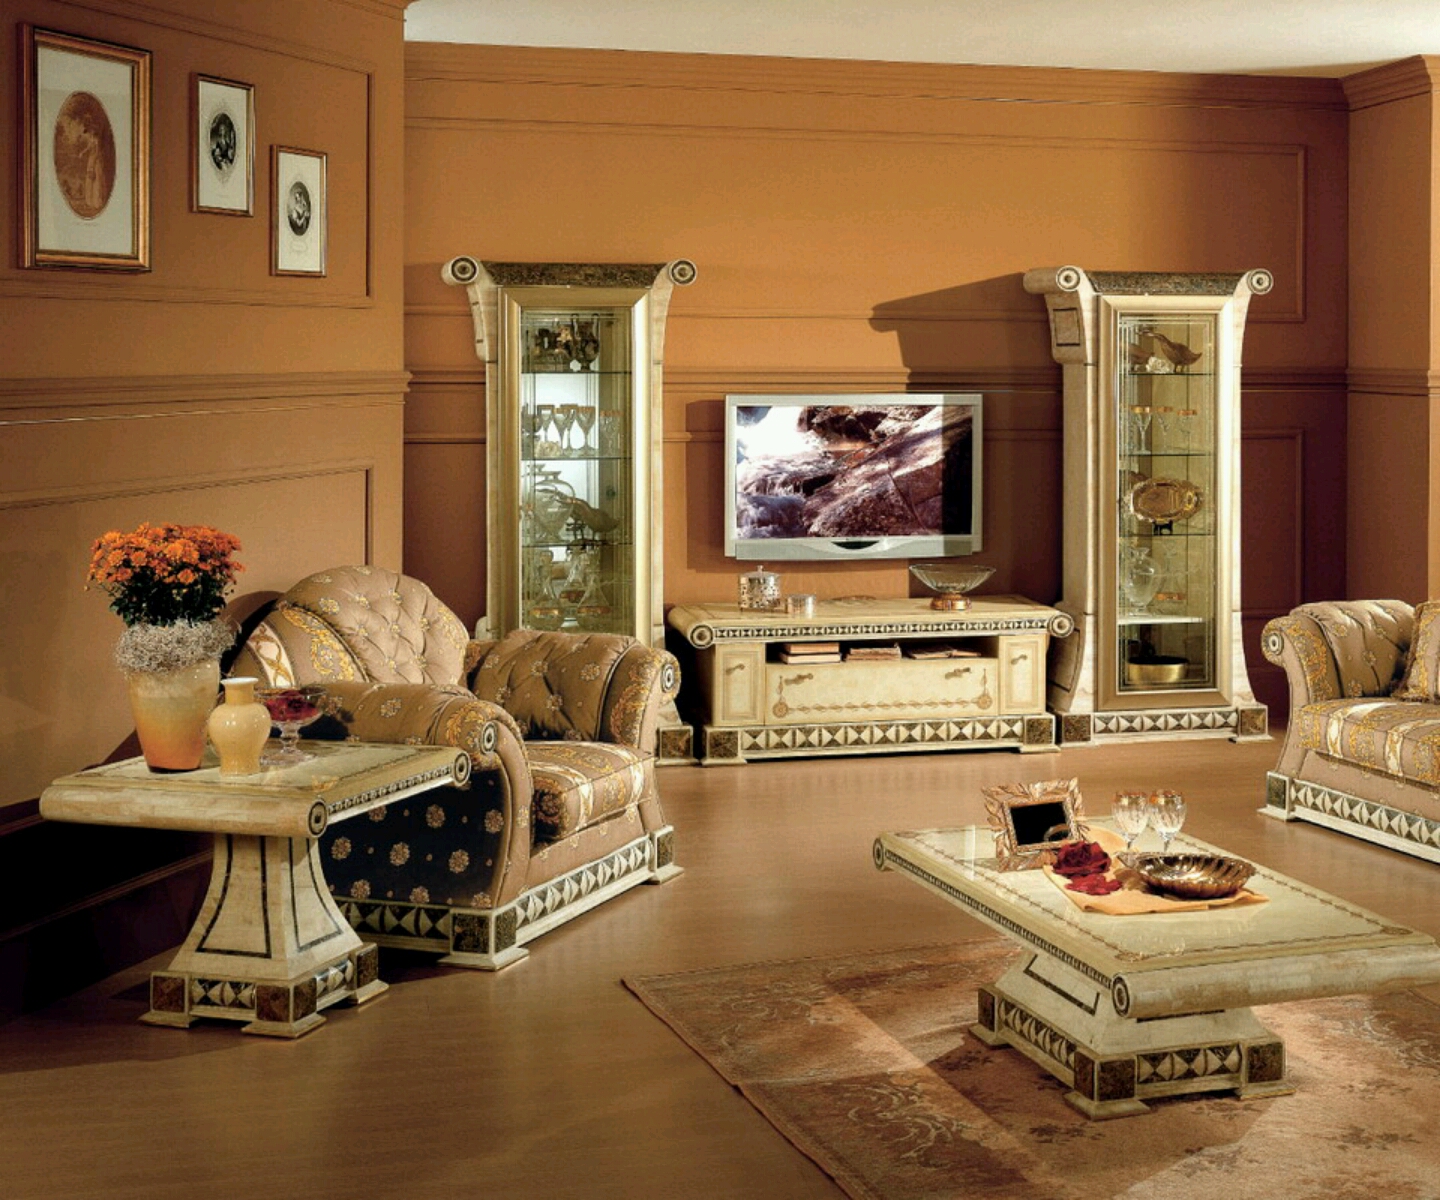 Modern living room designs ideas. | New home designs